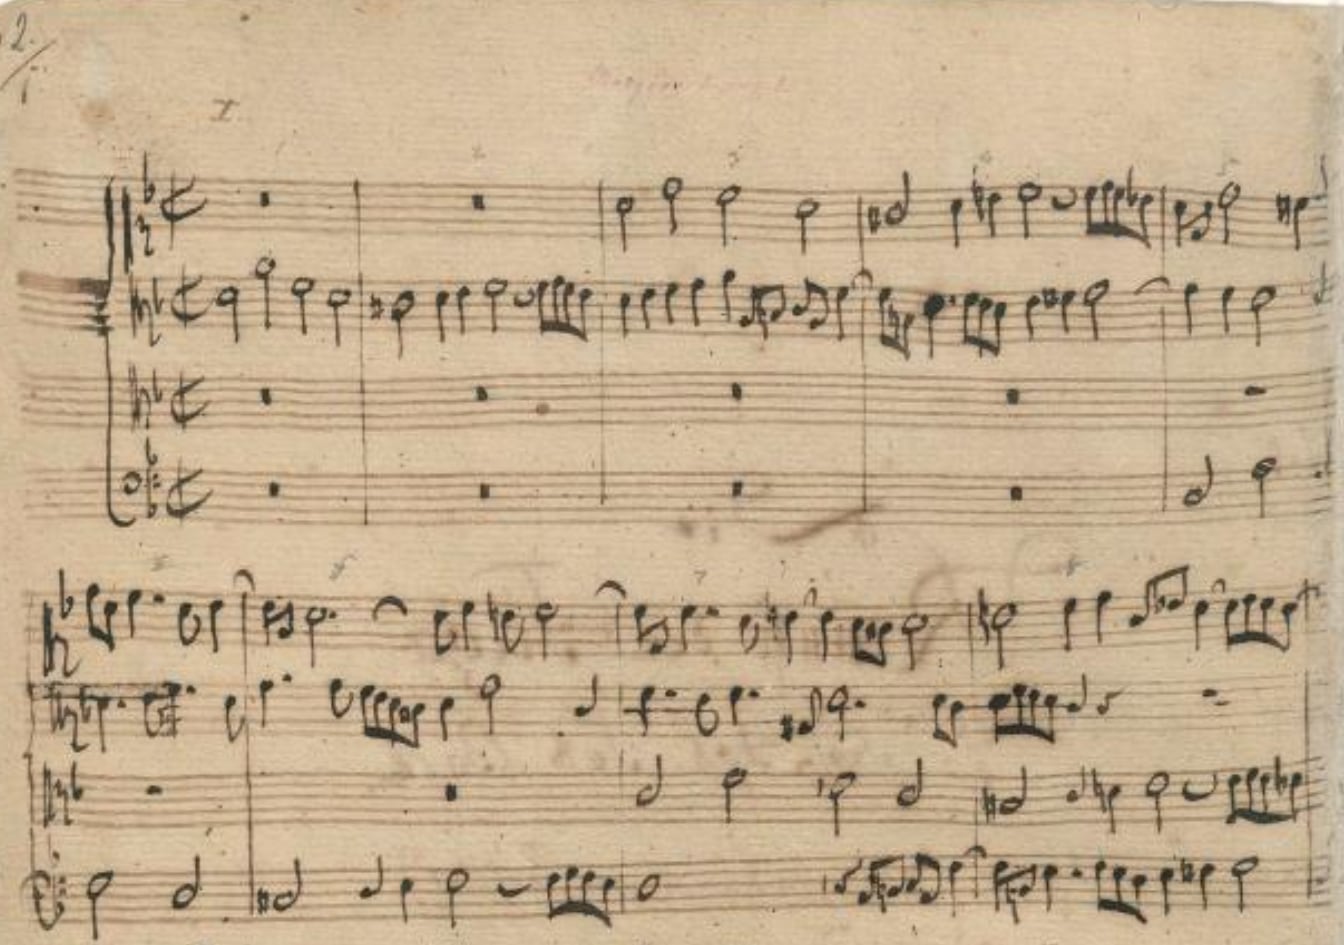 Comienzo del manuscrito autógrafo de Bach del Contrapuntus I de 'El arte de la fuga' de Bach.